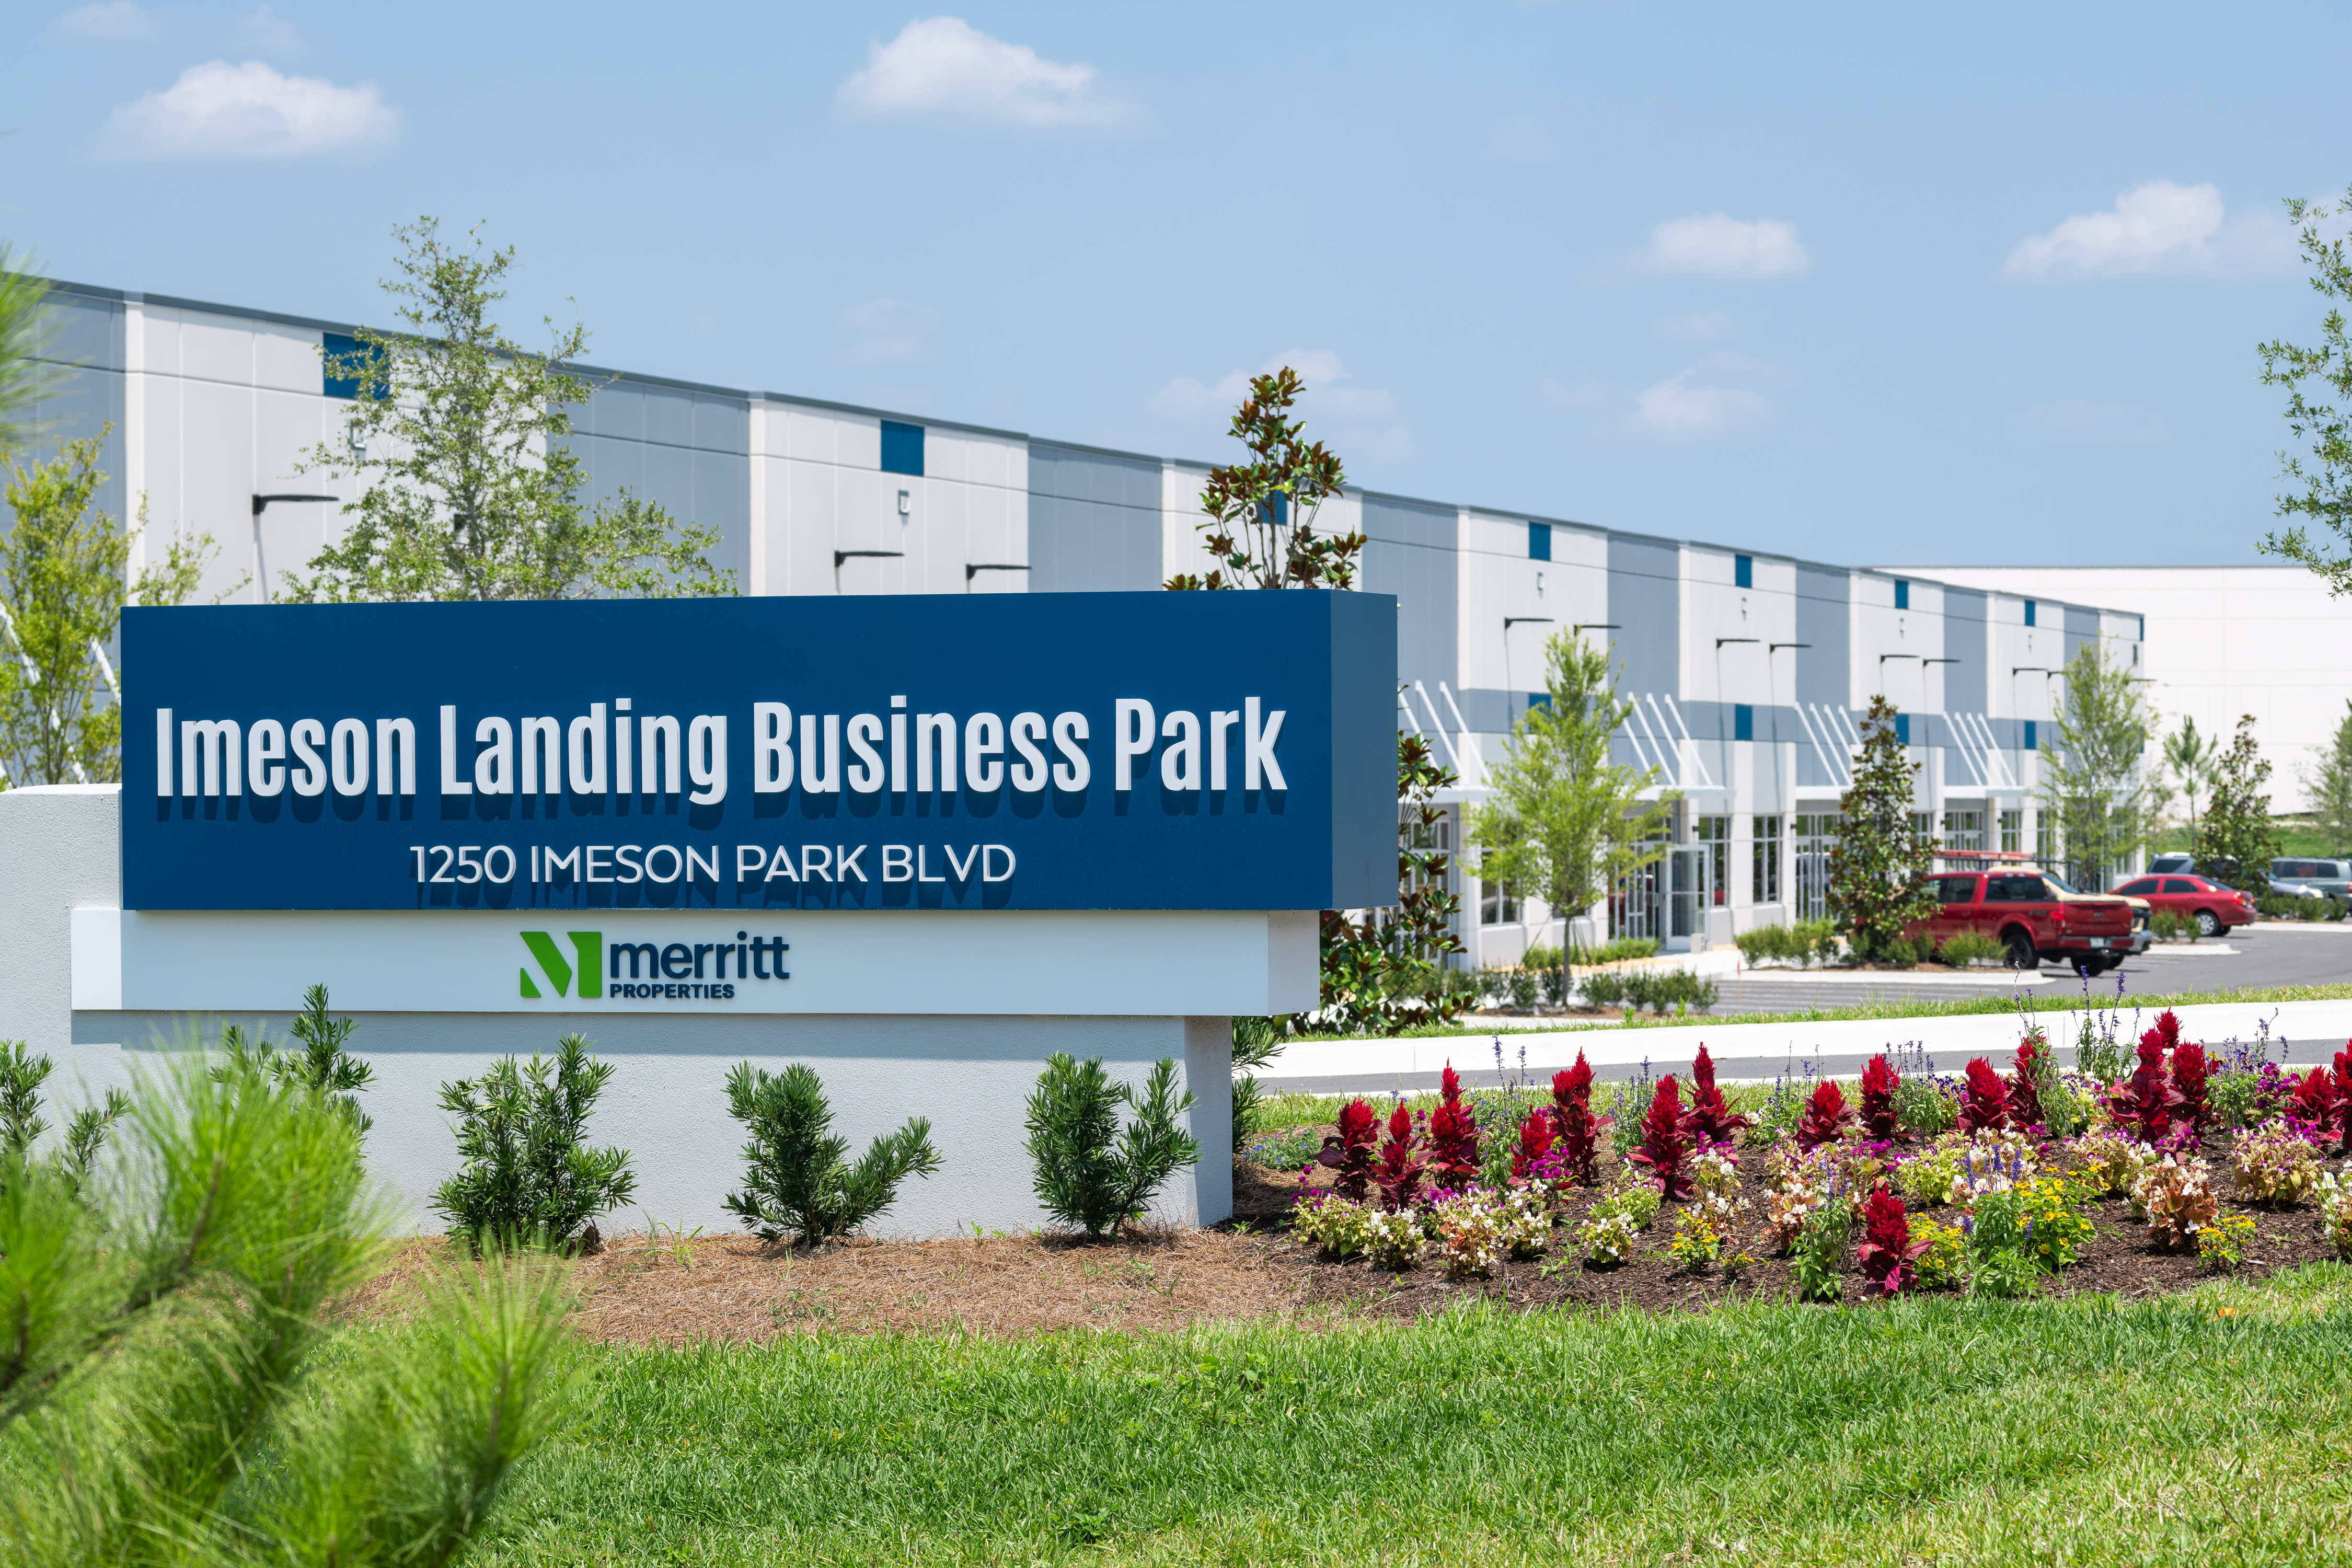 Imeson Landing Business Park wins NAIOP award